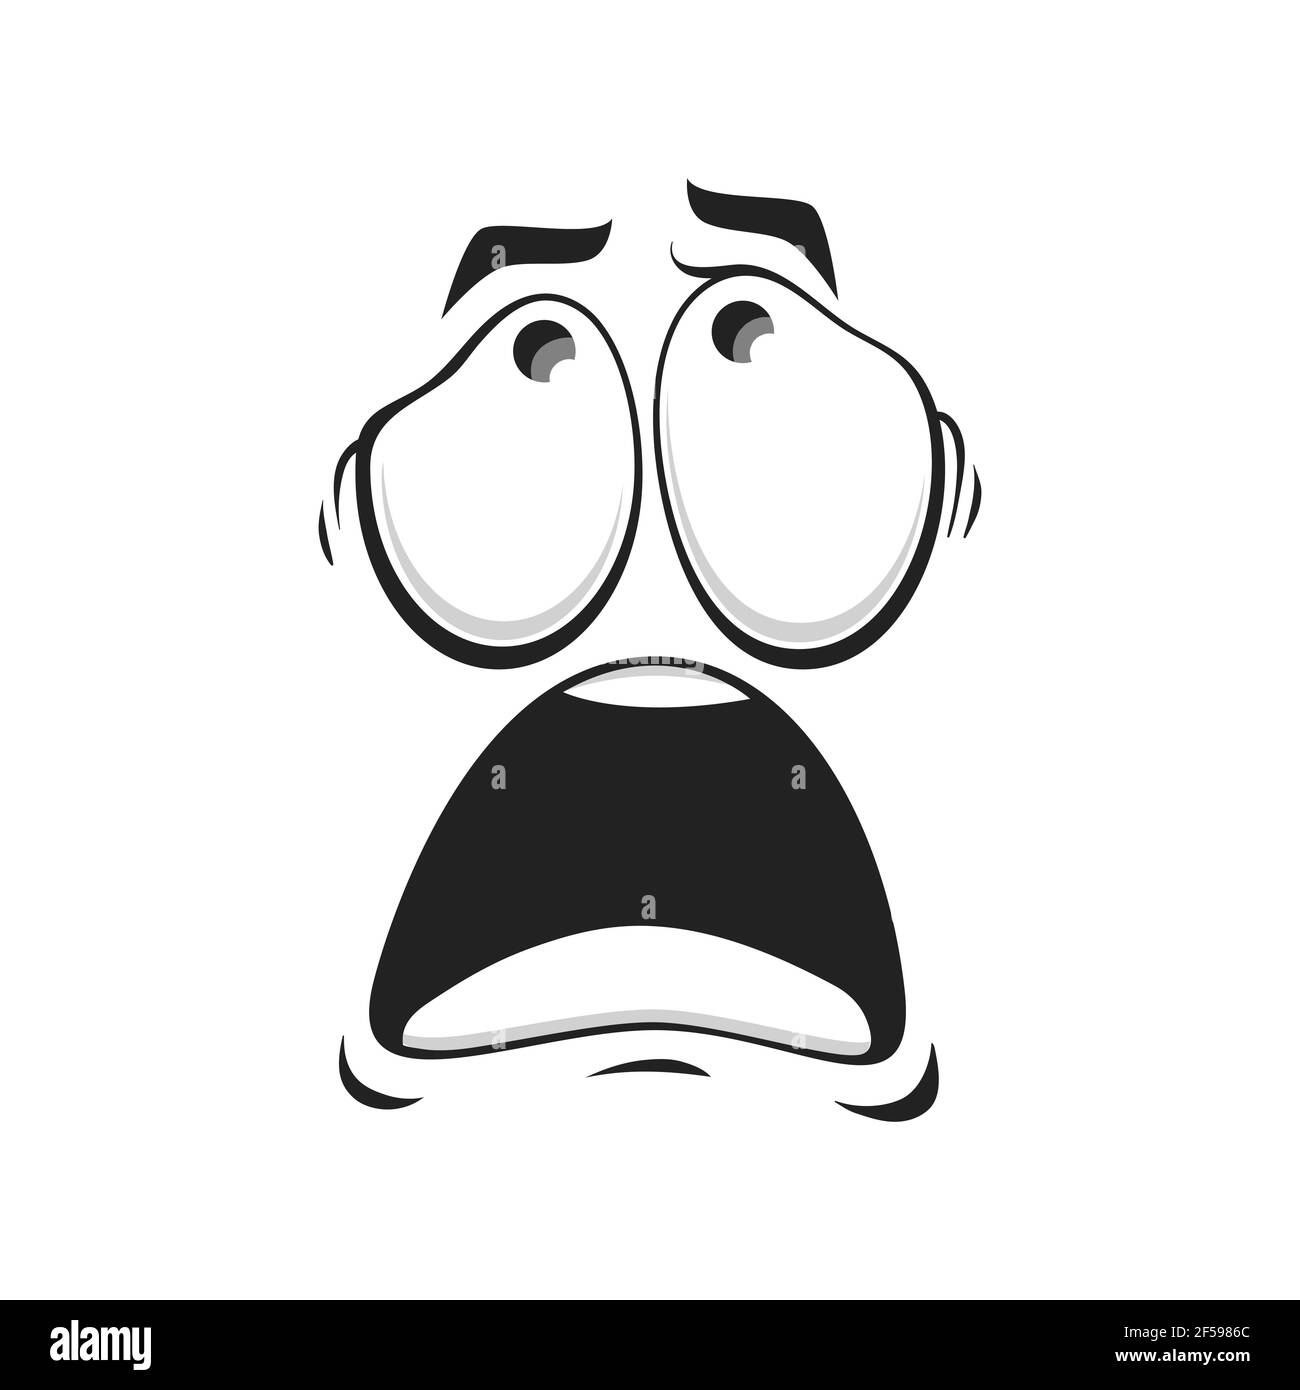 Shocked face emoji Black and White Stock Photos & Images - Alamy